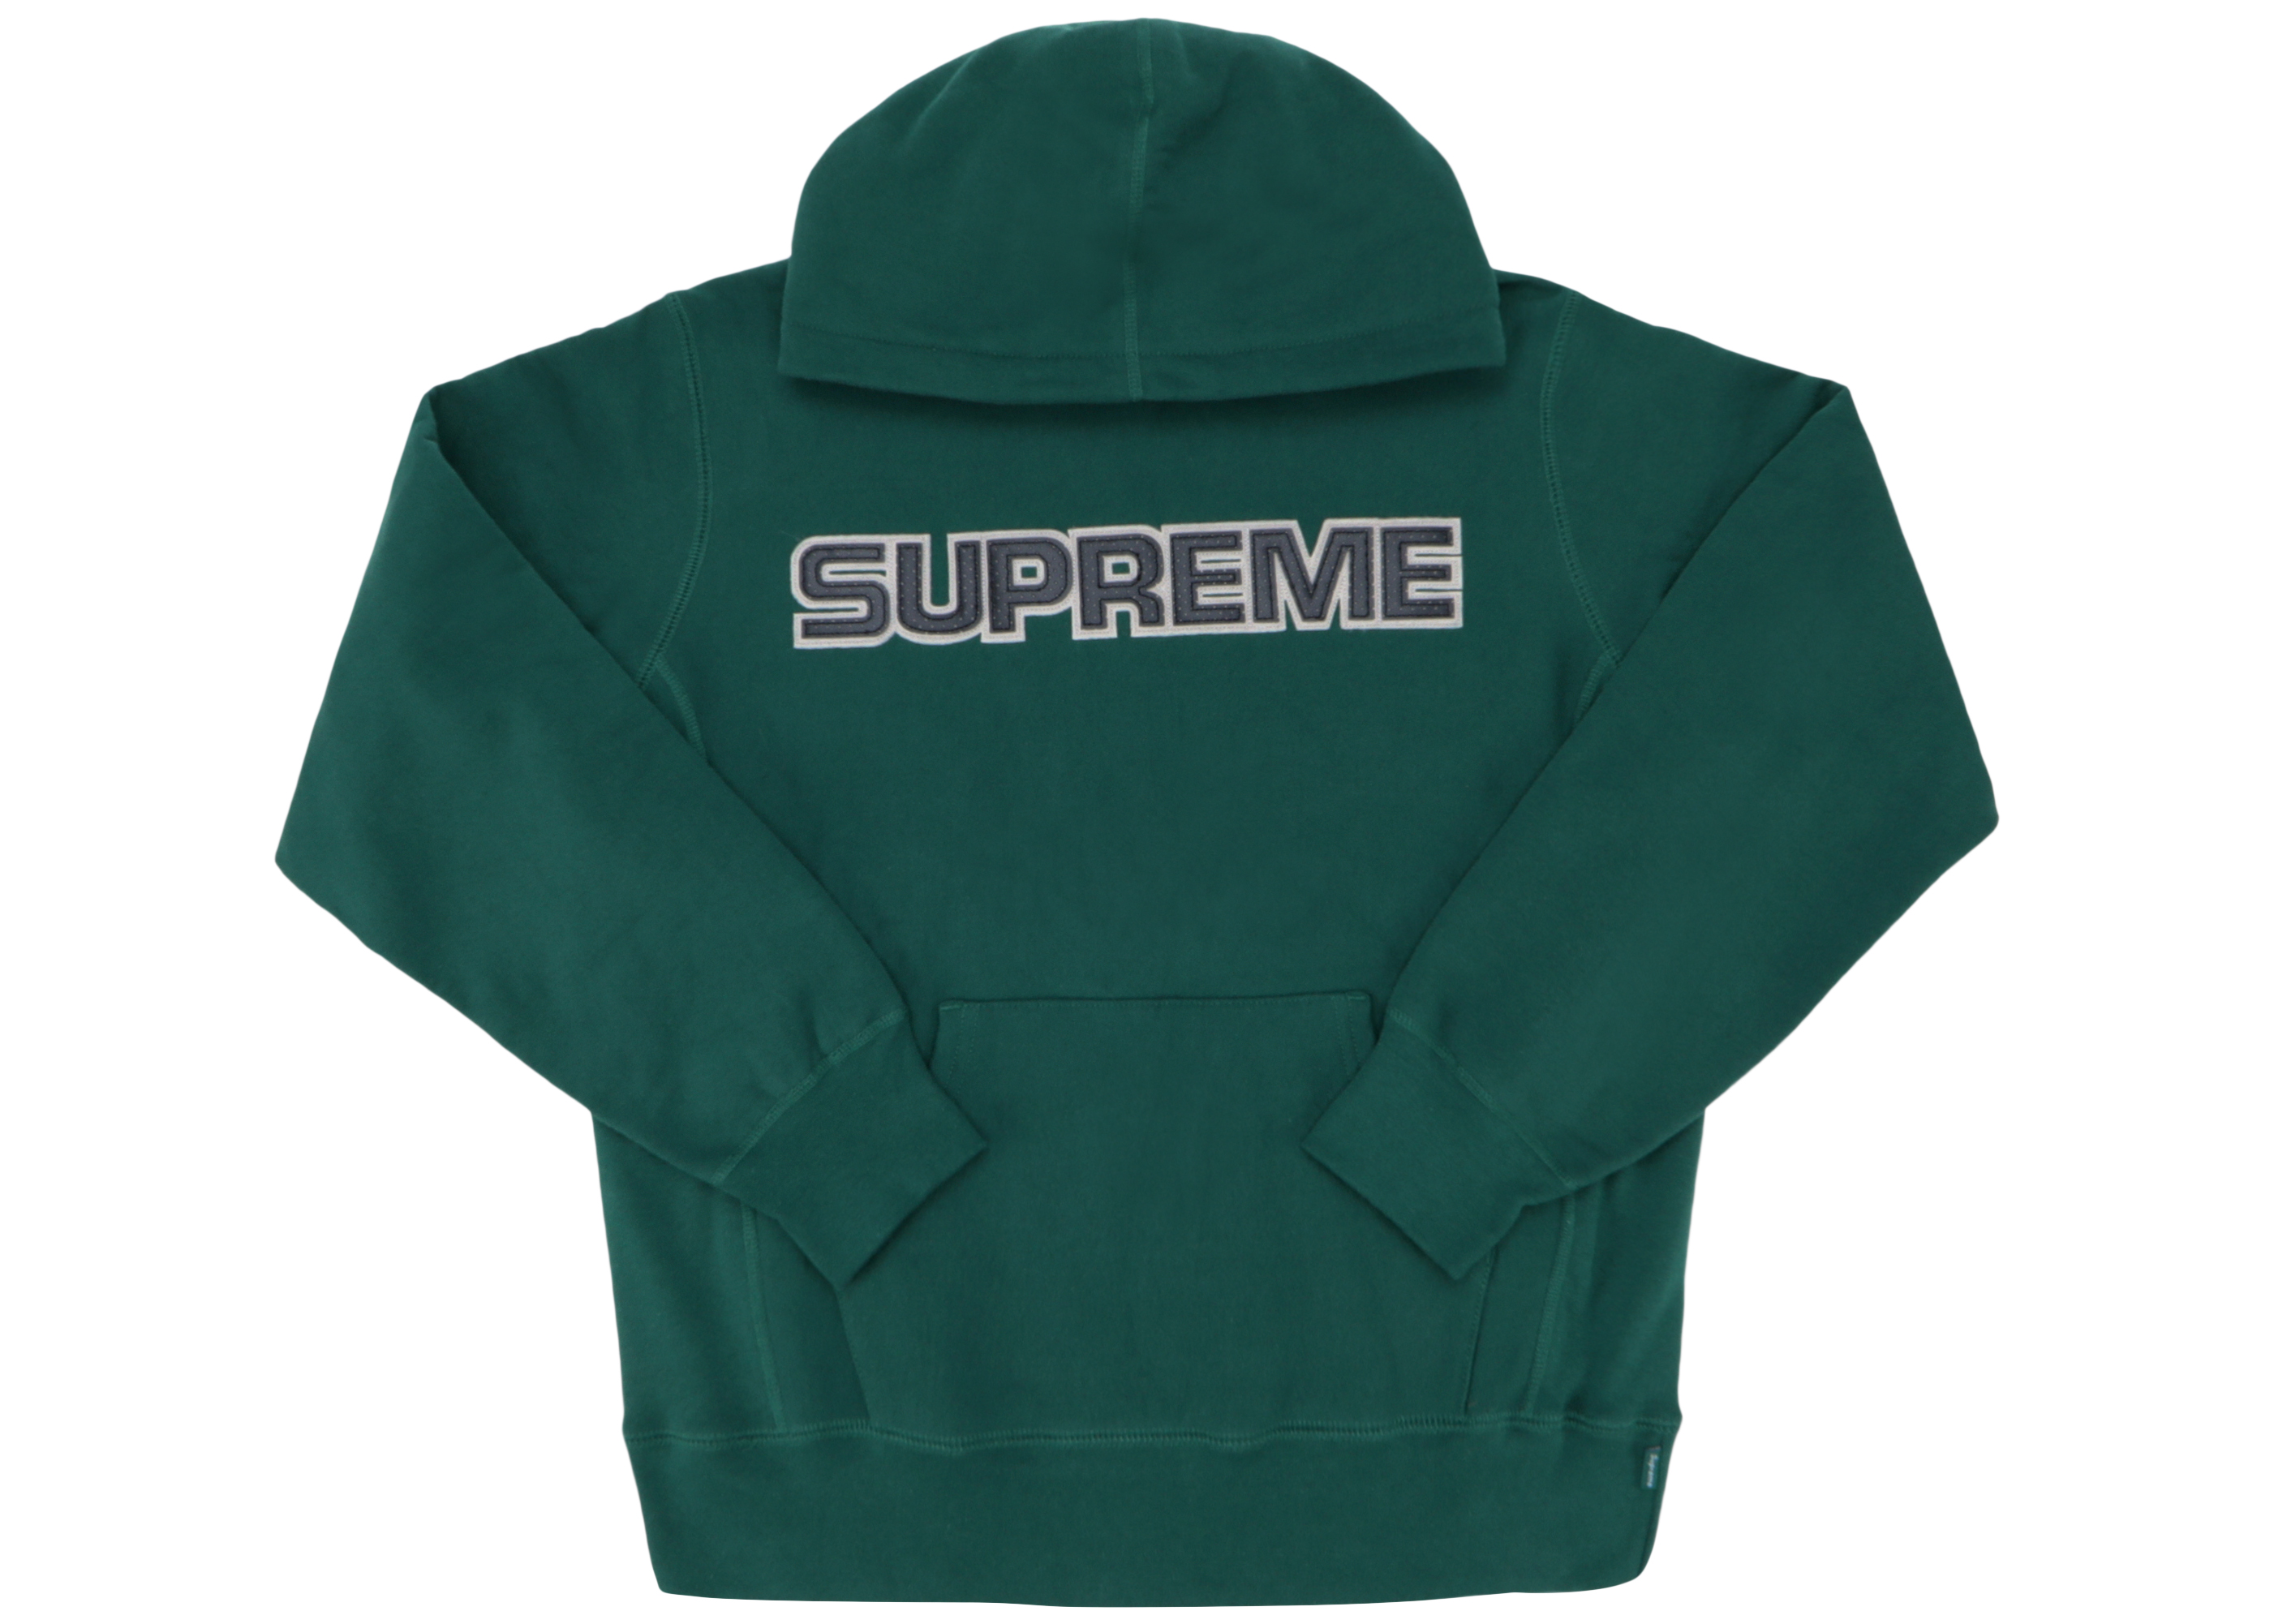 Supreme Perforated Leather Hooded Sweatshirt Dark Green - Novelship